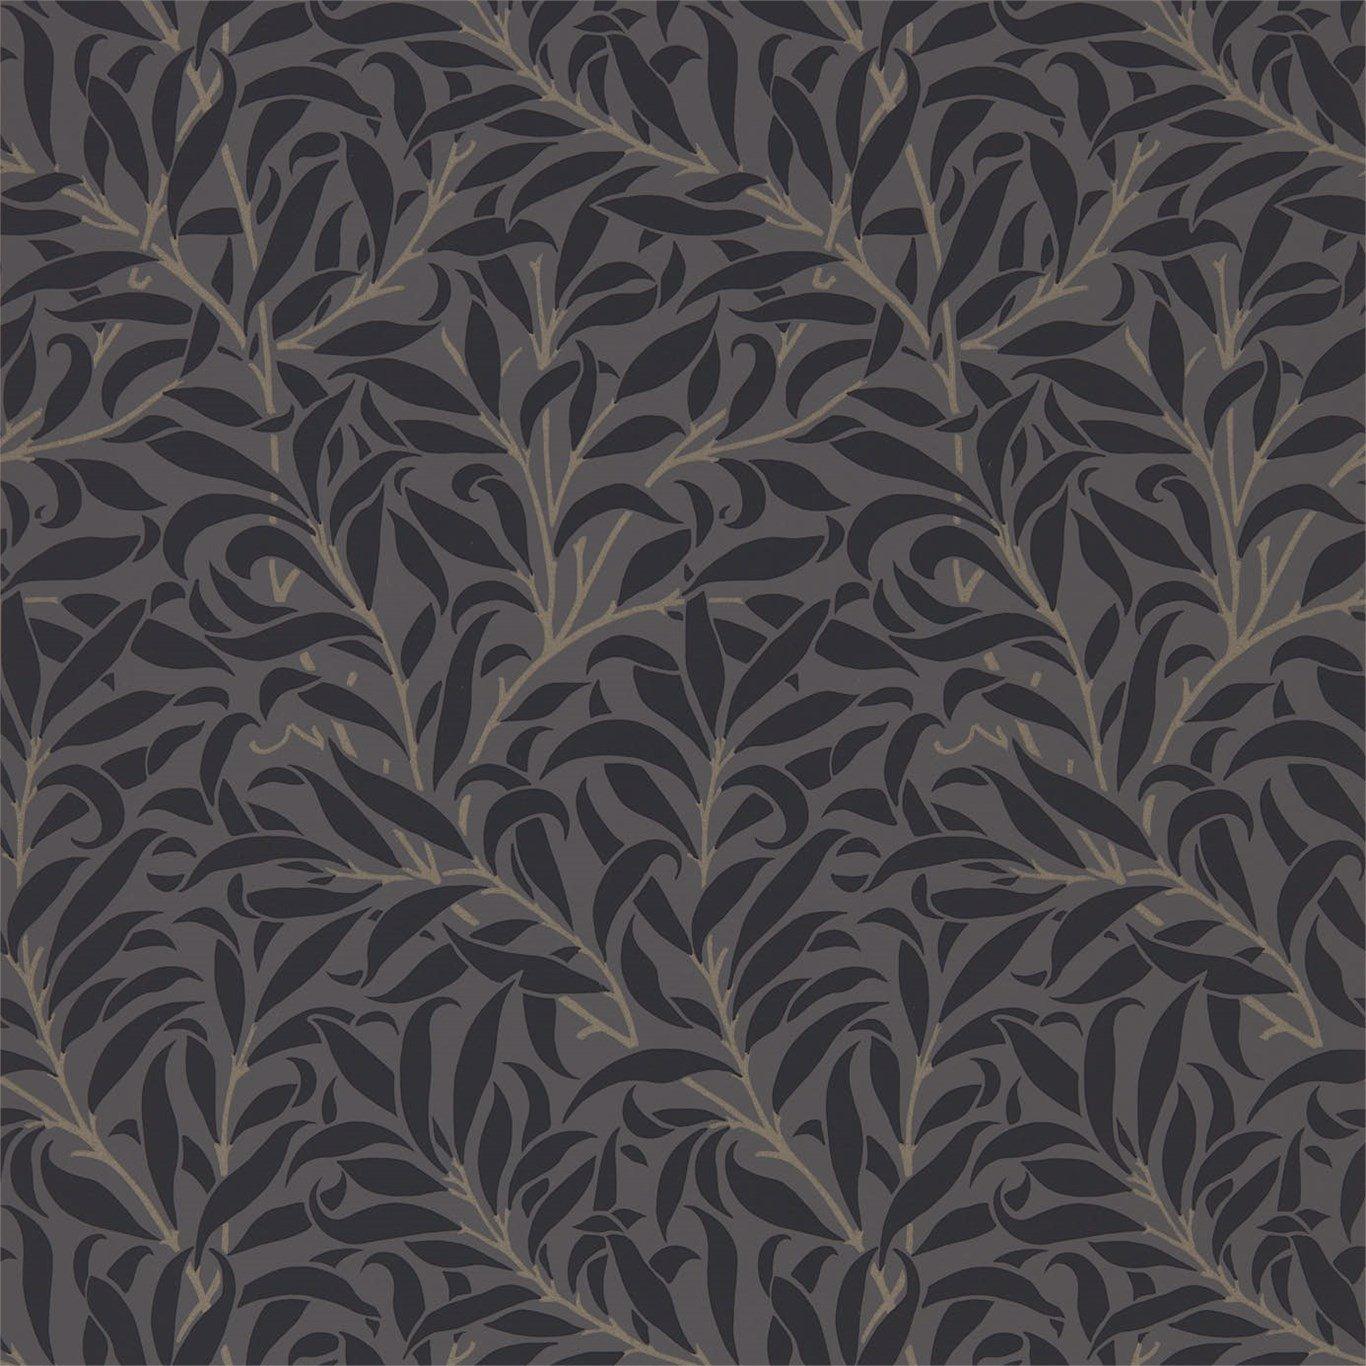 William Morris Willow Bough Wallpaper Decor Zoffany Charcoal/Black 